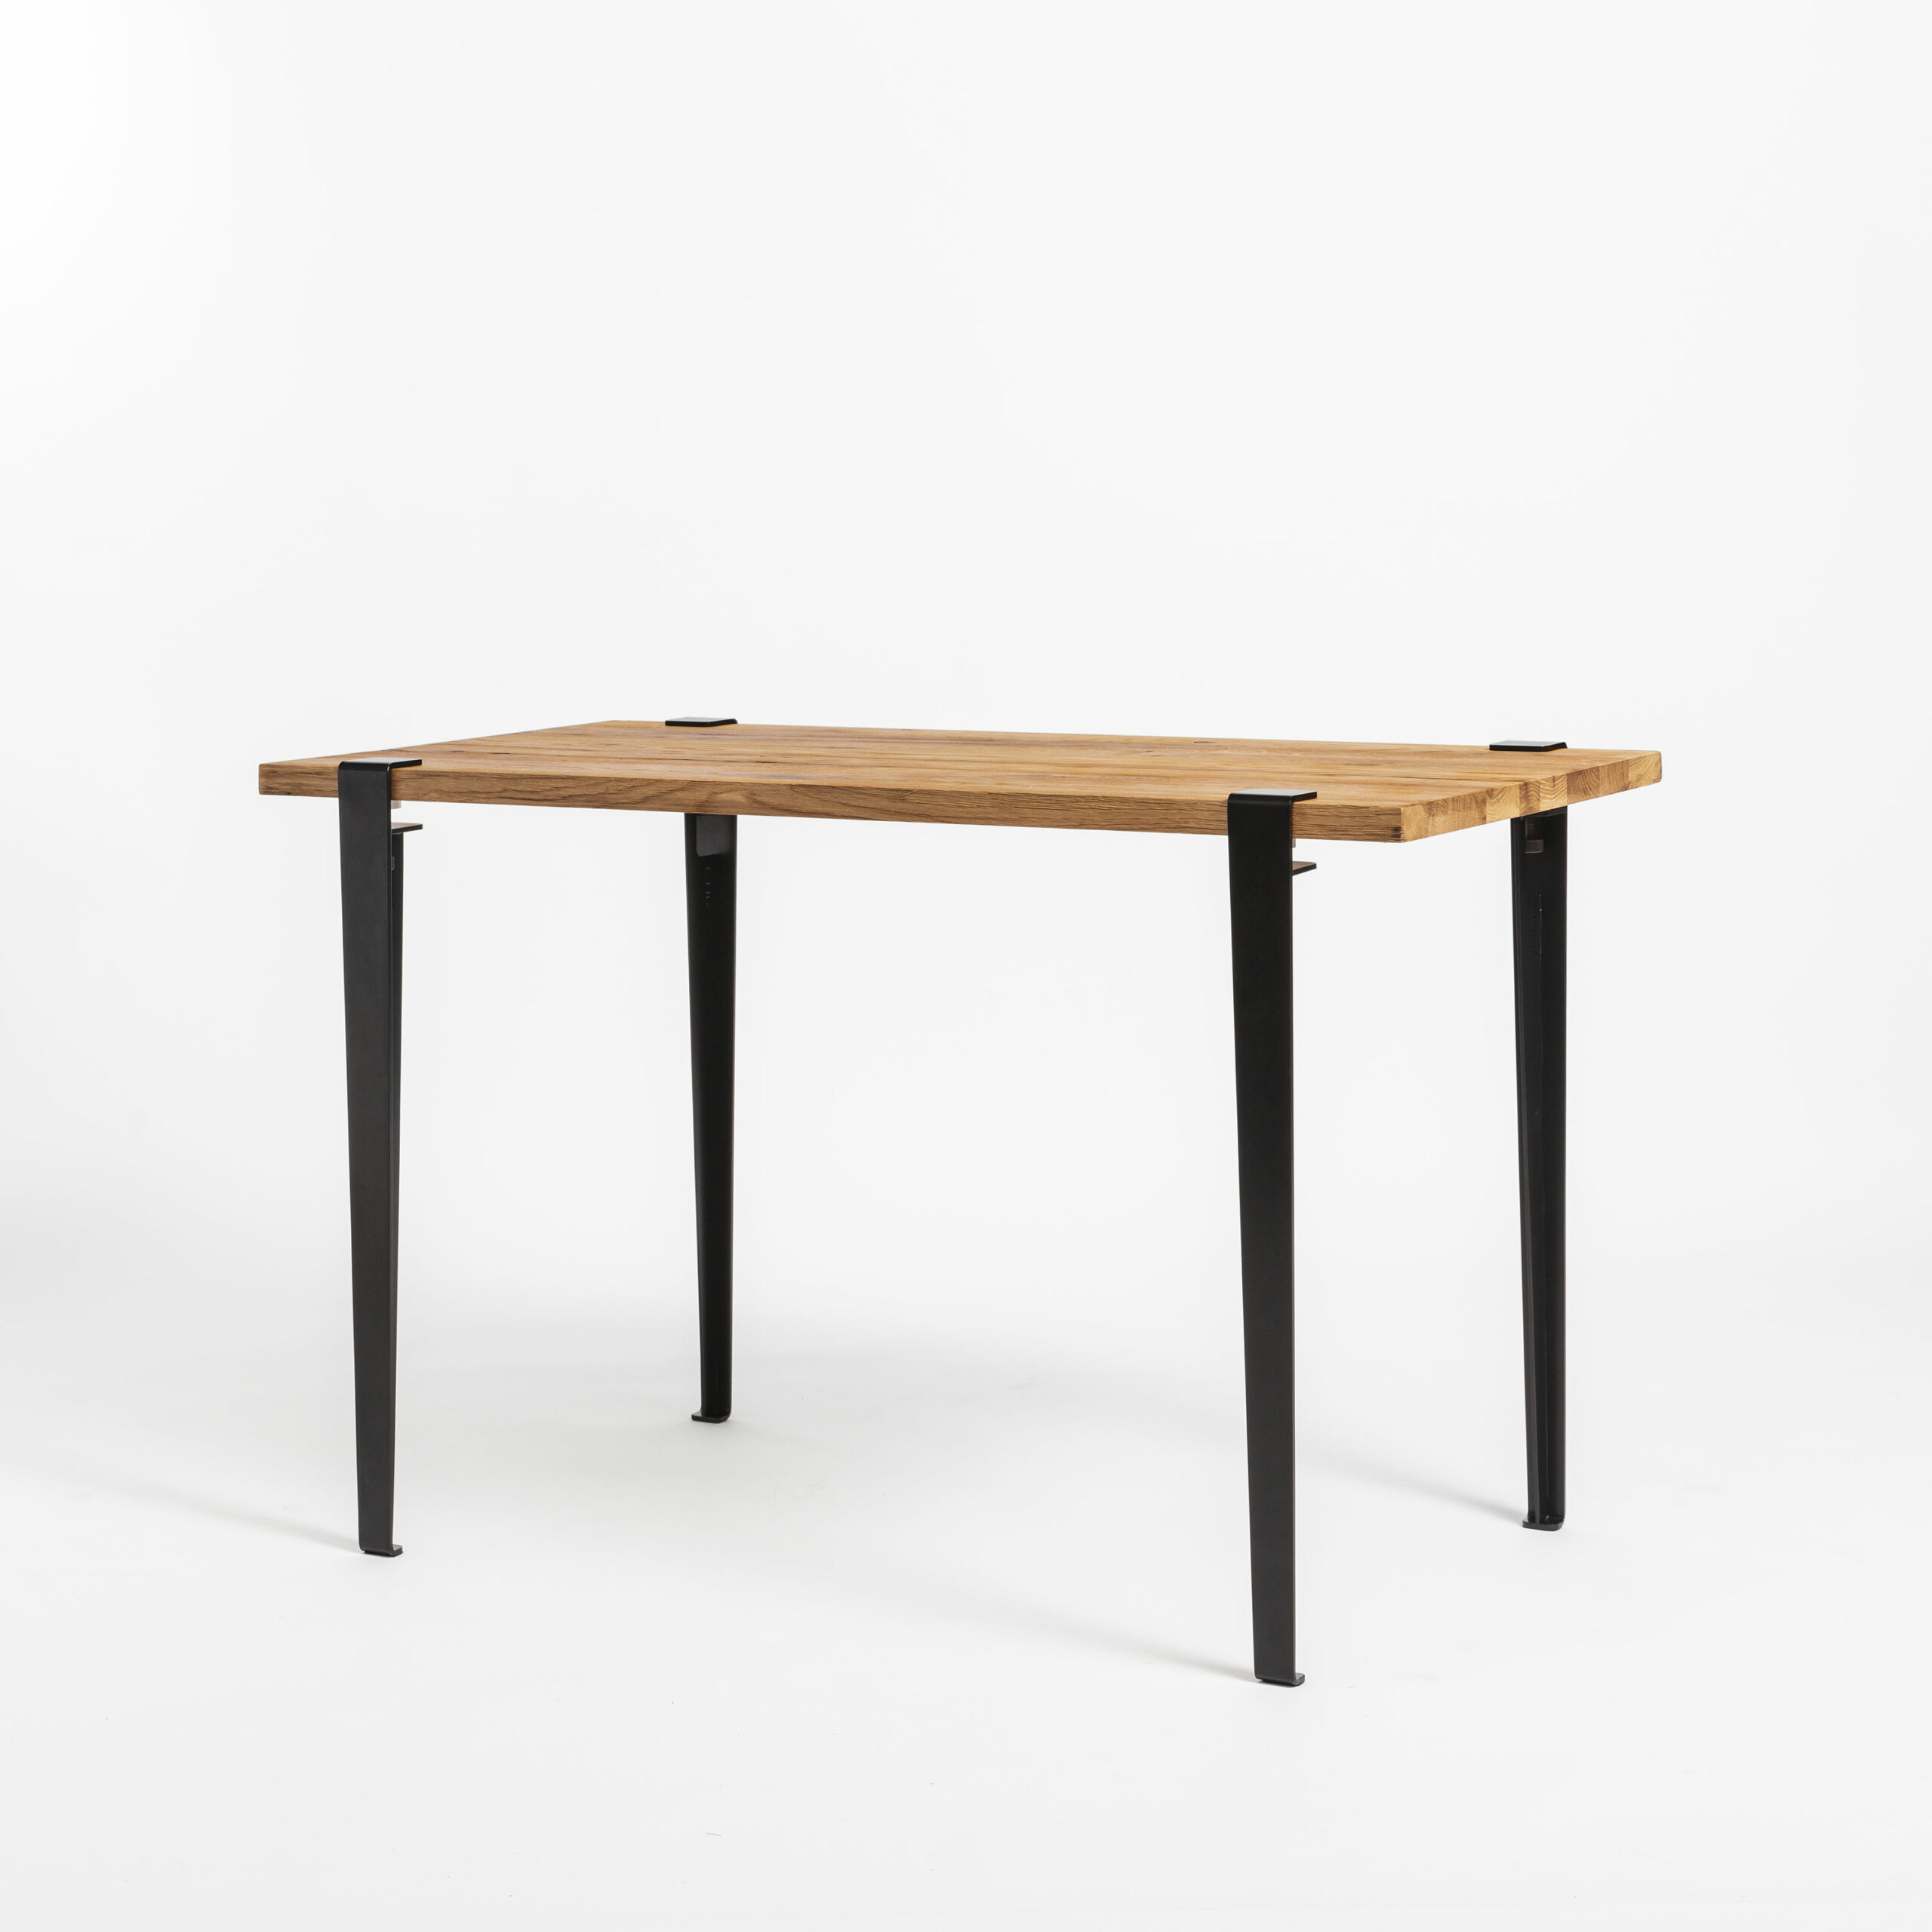 Old wooden desk with TIPTOE steel table legs